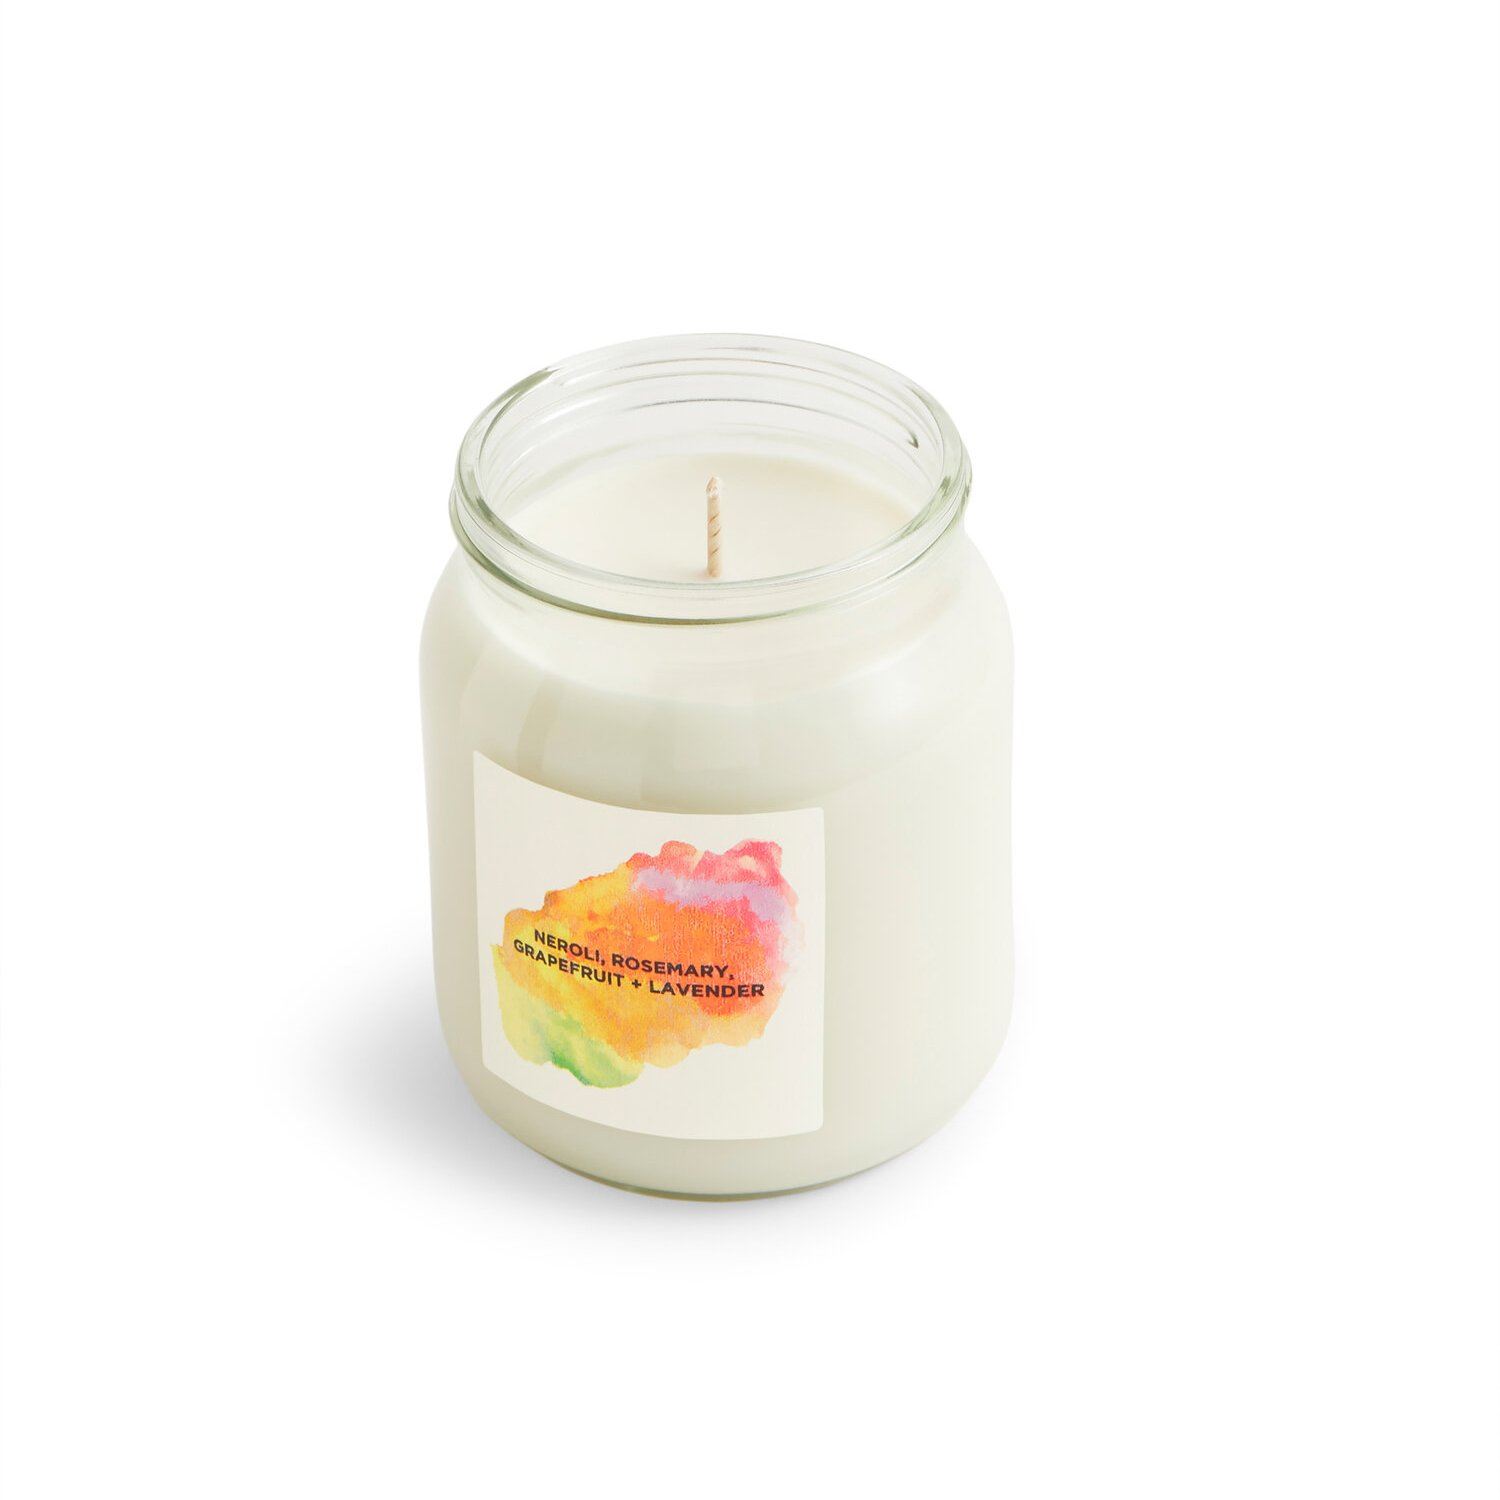 Neroli, Rosemary, Grapefruit + Lavender Aromatherapy Candle Kerzen Self Care Co. 300ml - Genuine Selection